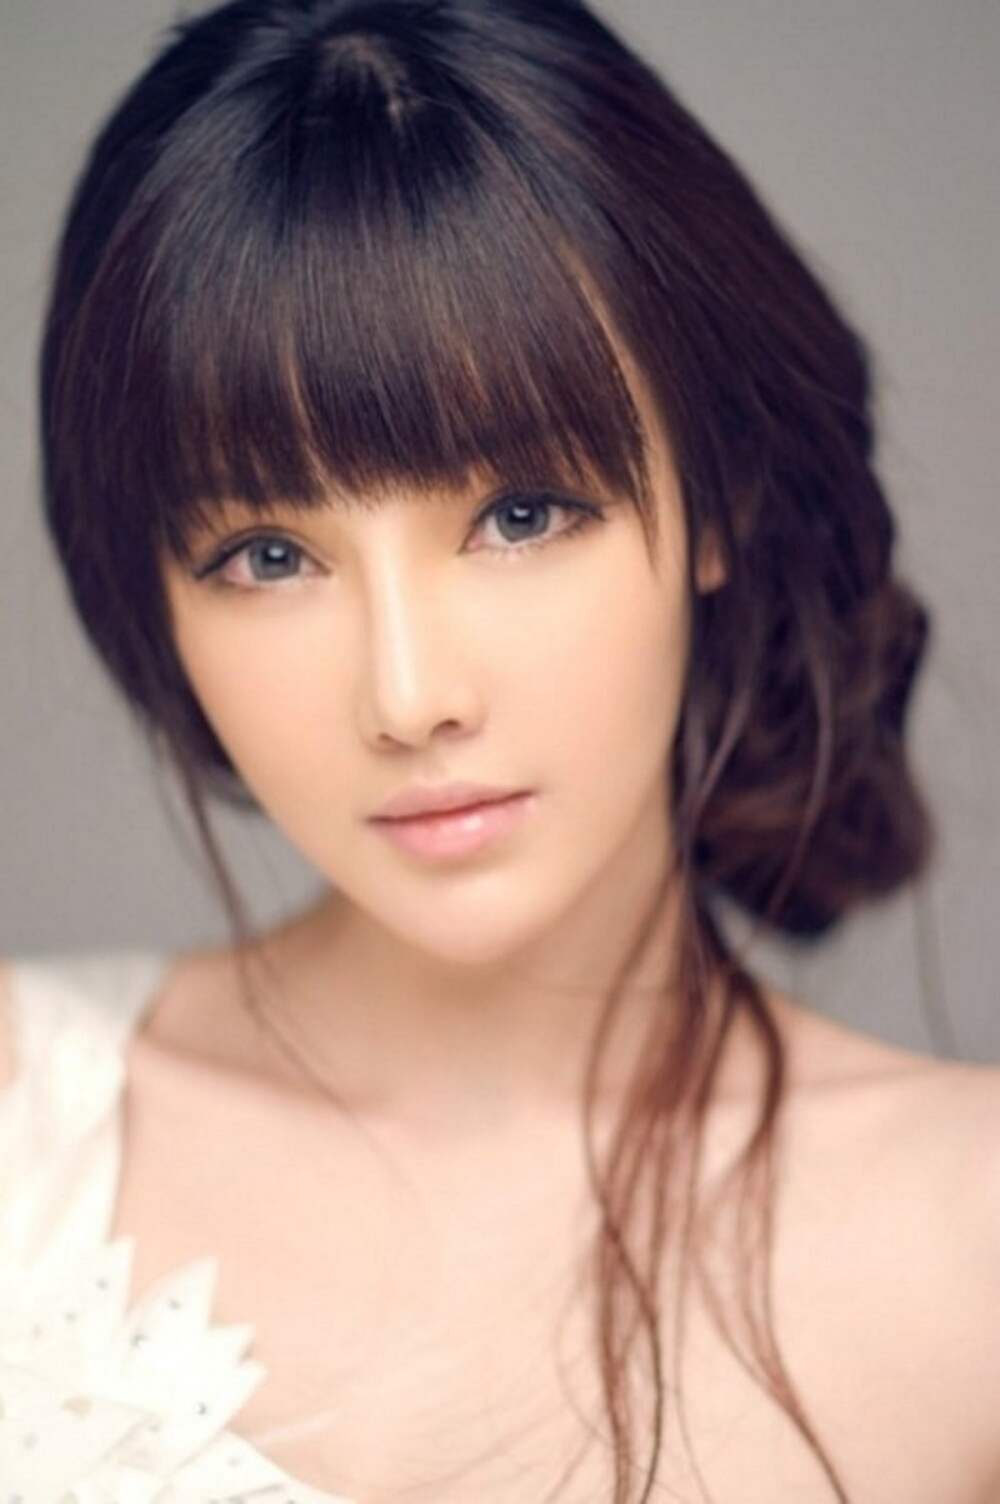 China beautiful girls. Азиатские девушки. Красивые азиатские девушки. Японская девушка. Китайская челка.